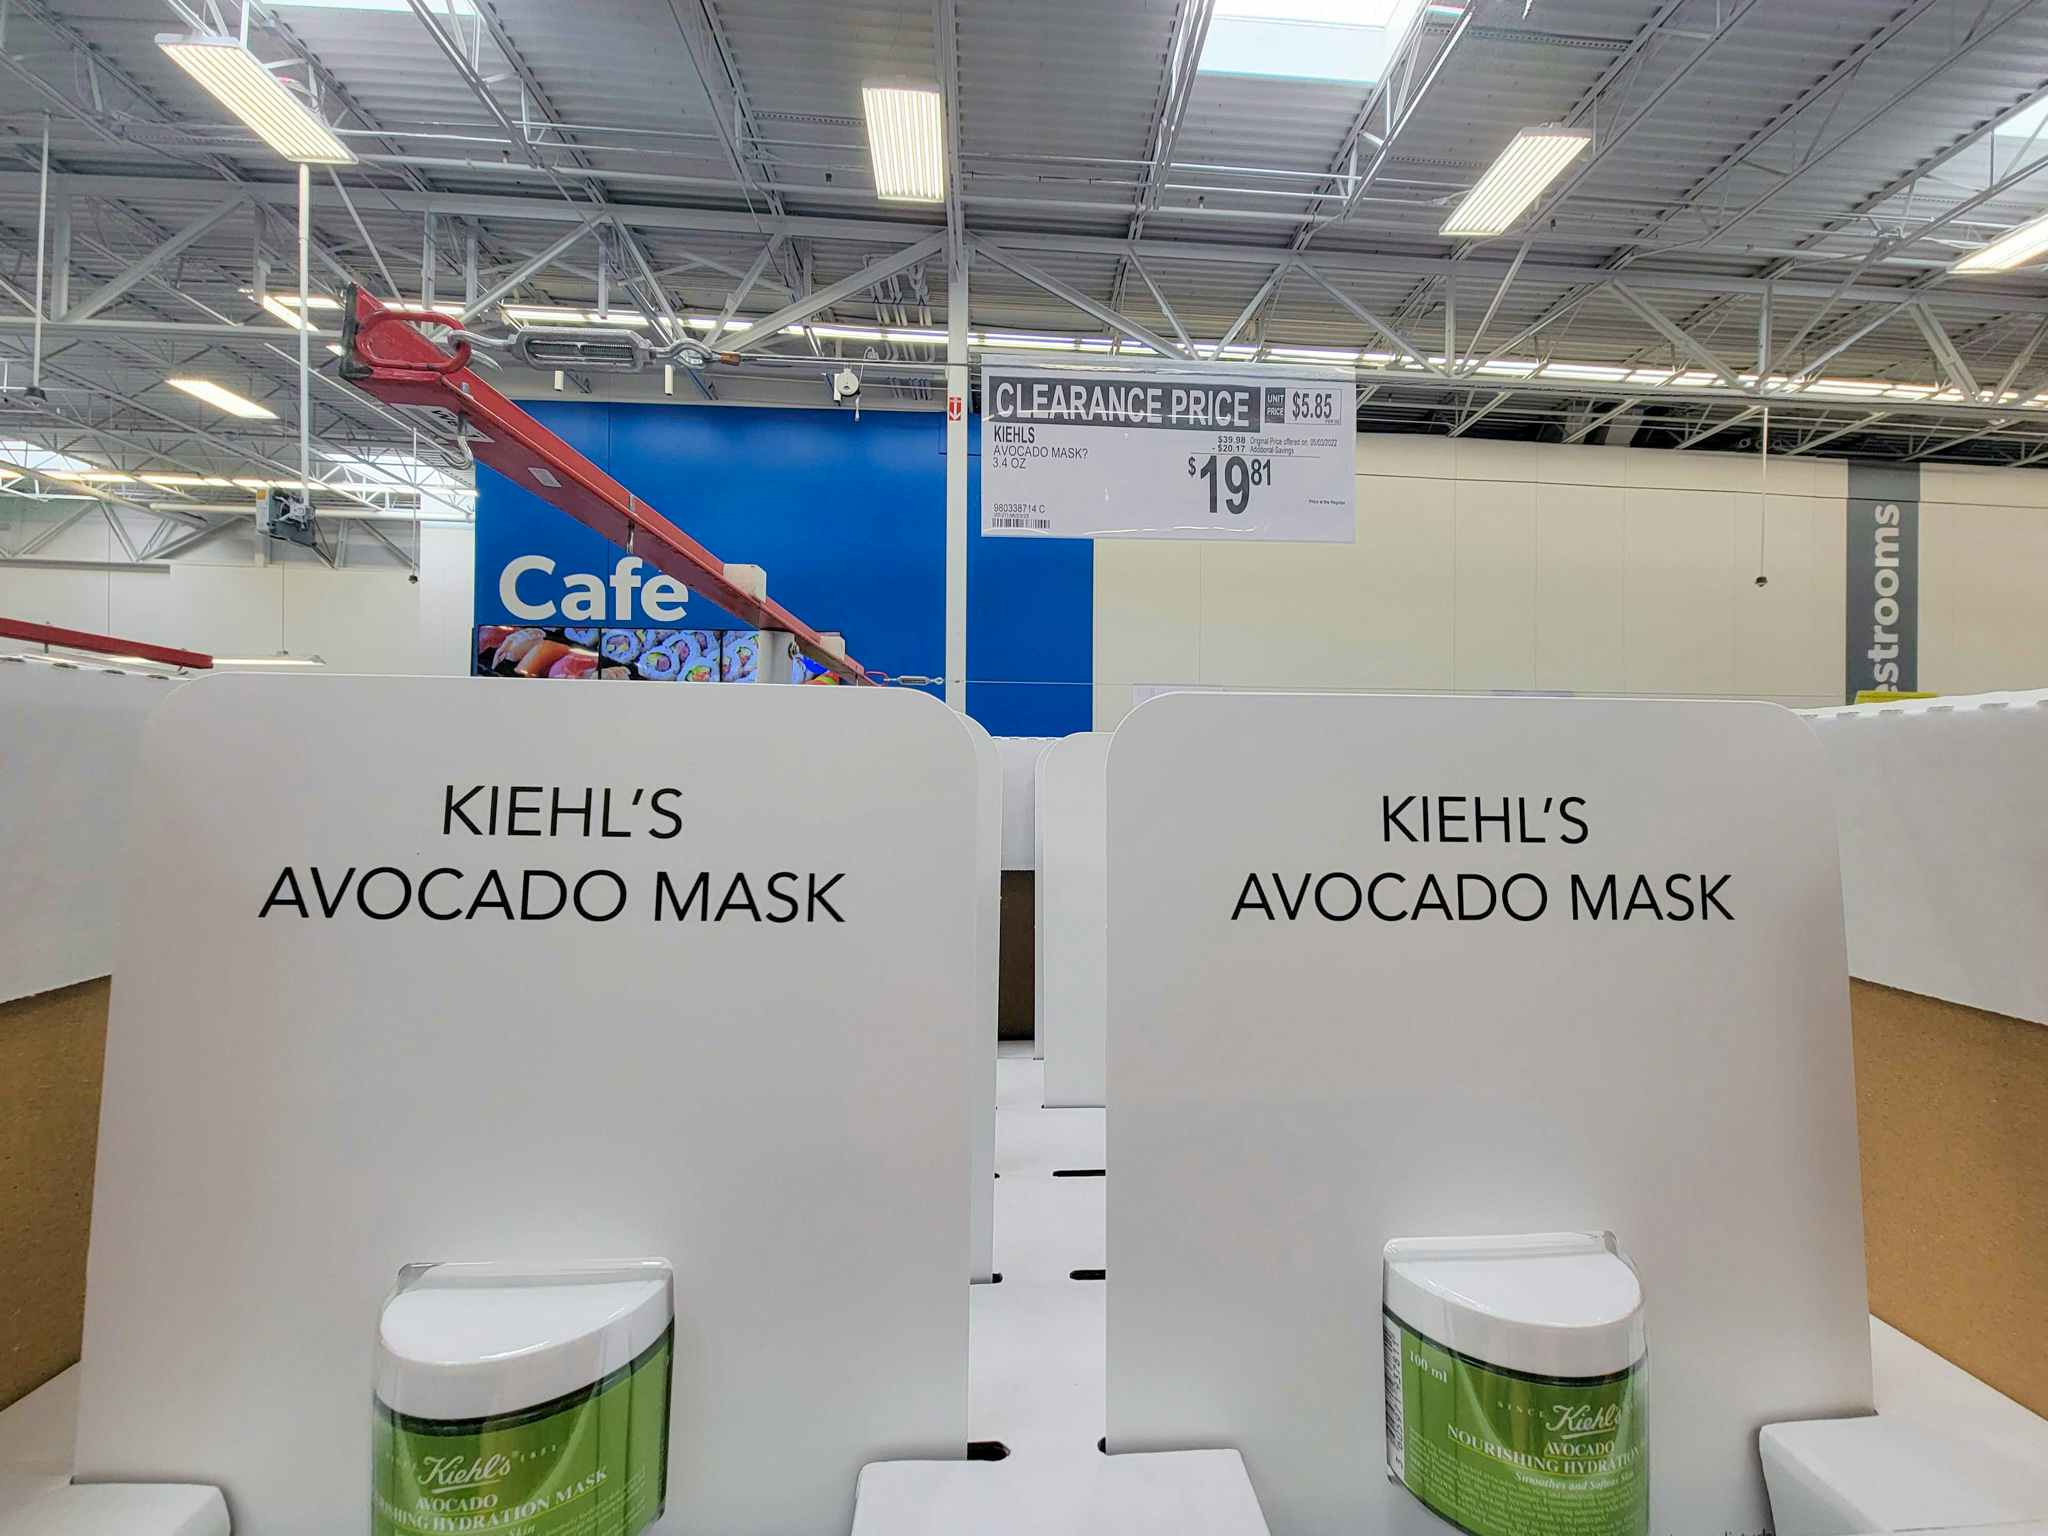 Kiehl's avocado masks